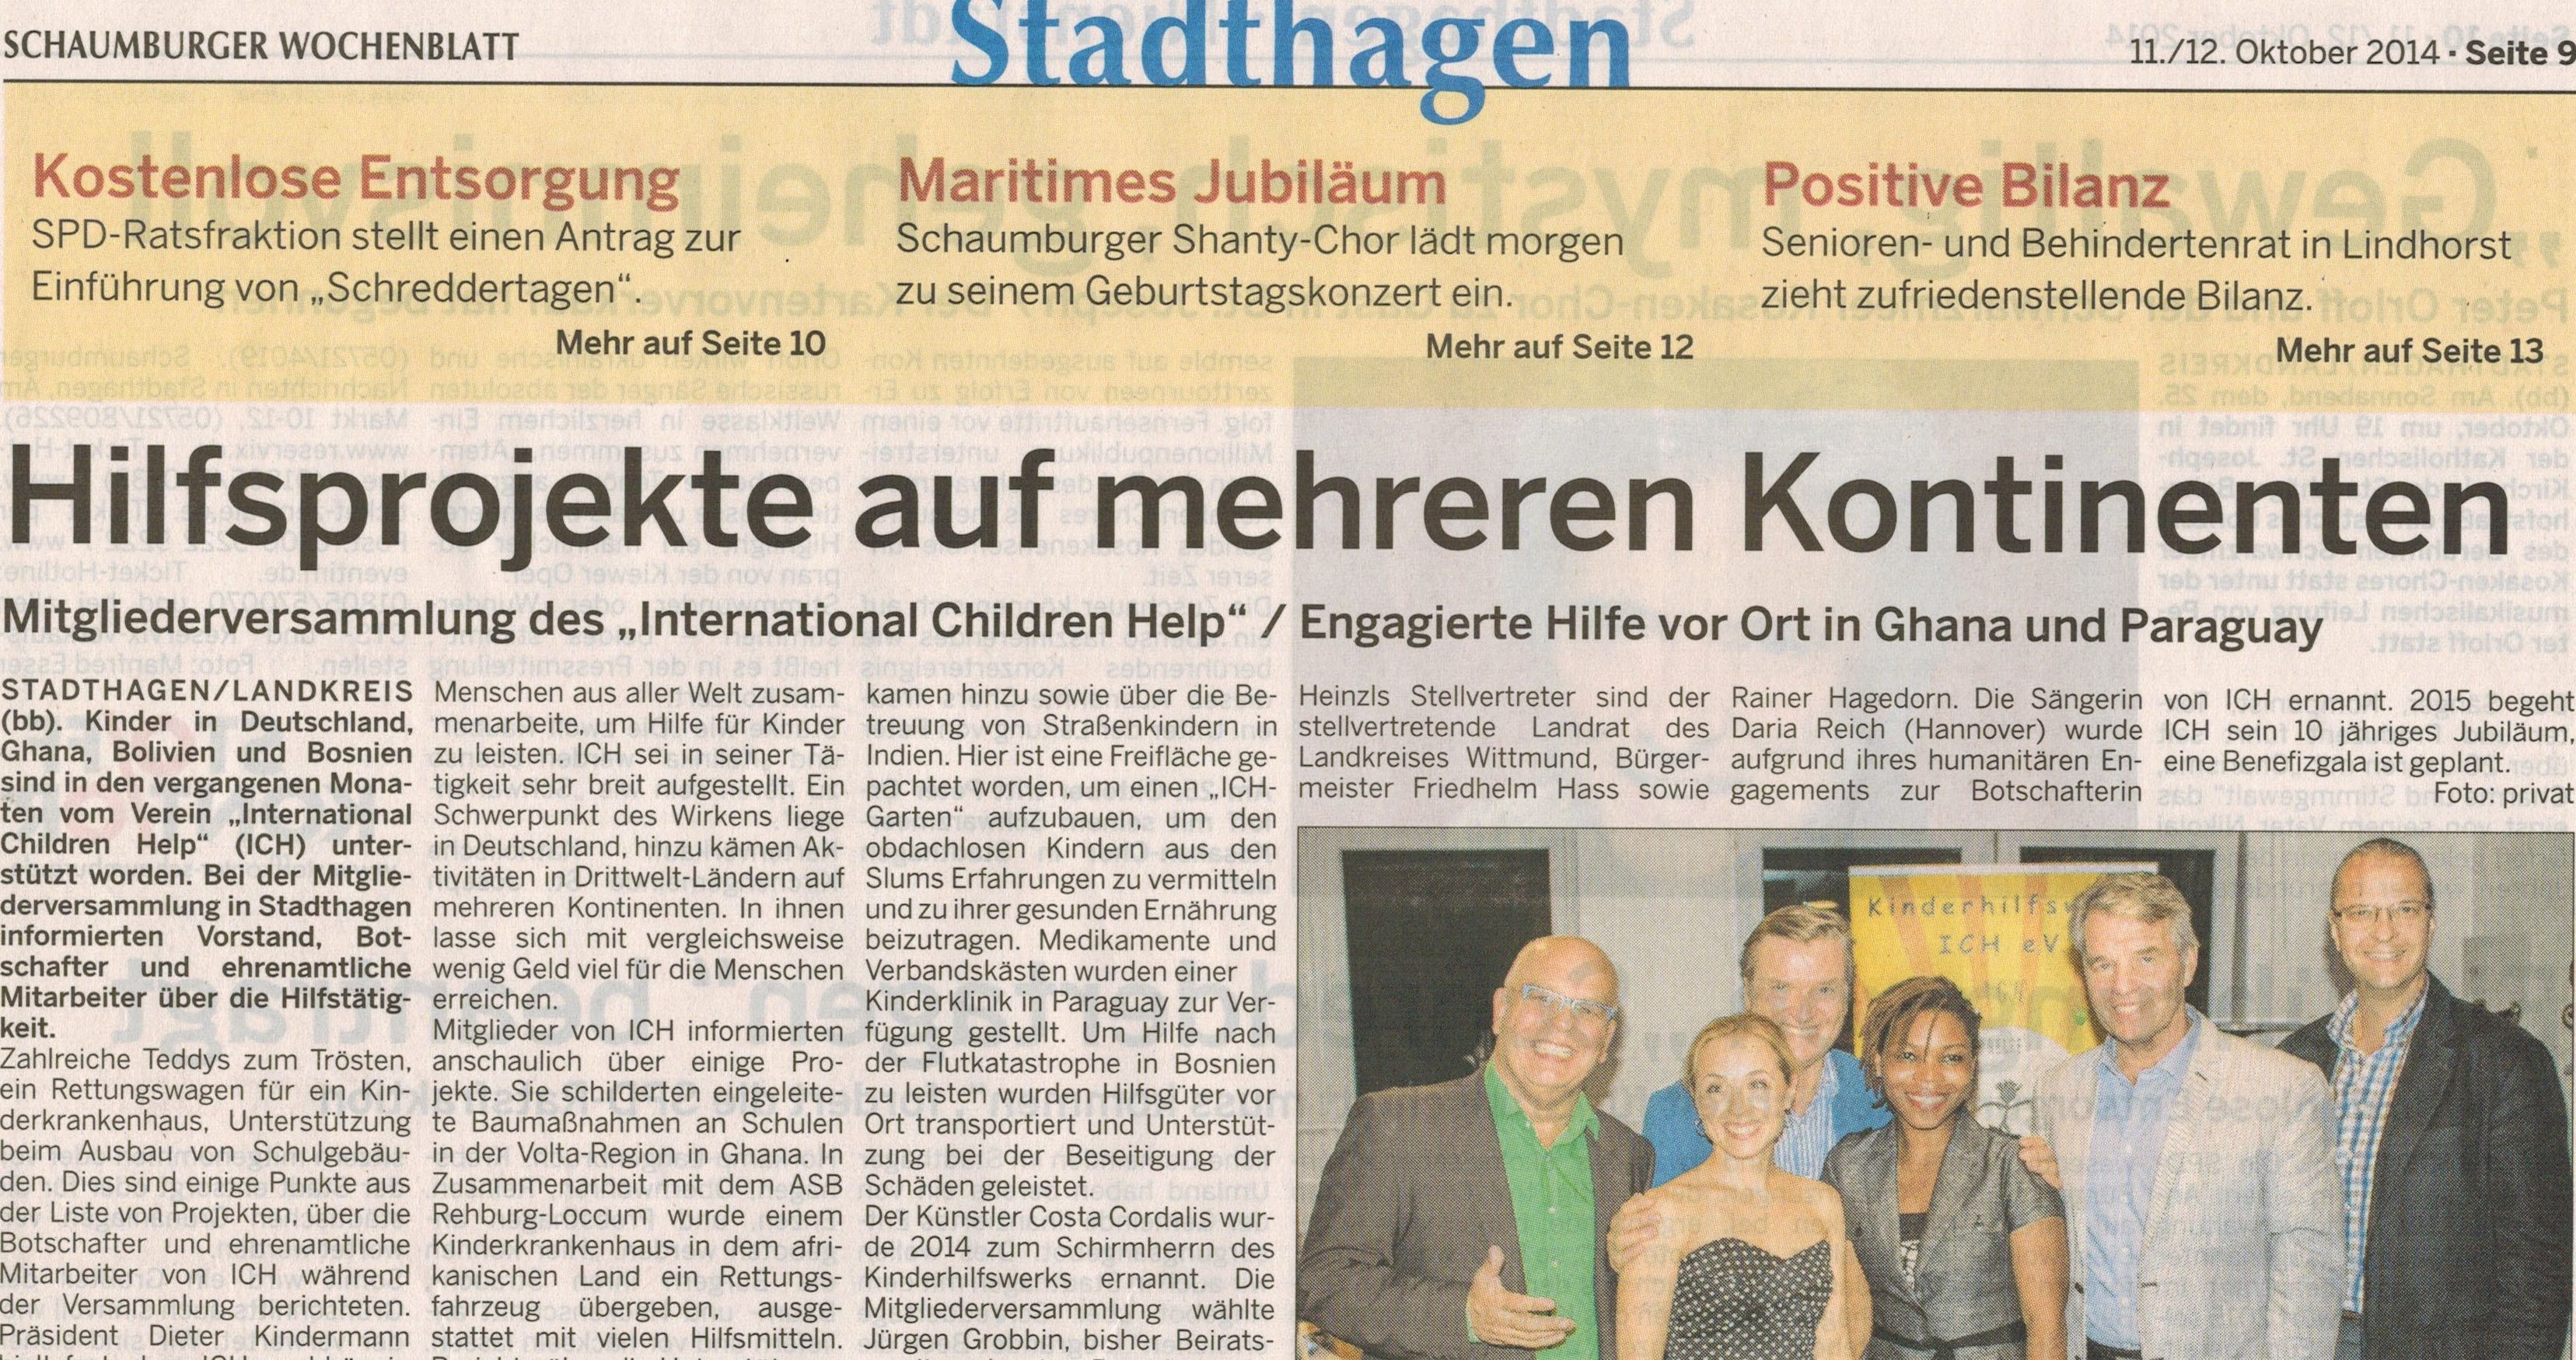 2014-11-12_Schaumburger_Wochenblatt_Mitgliederversammlung_2014_gross